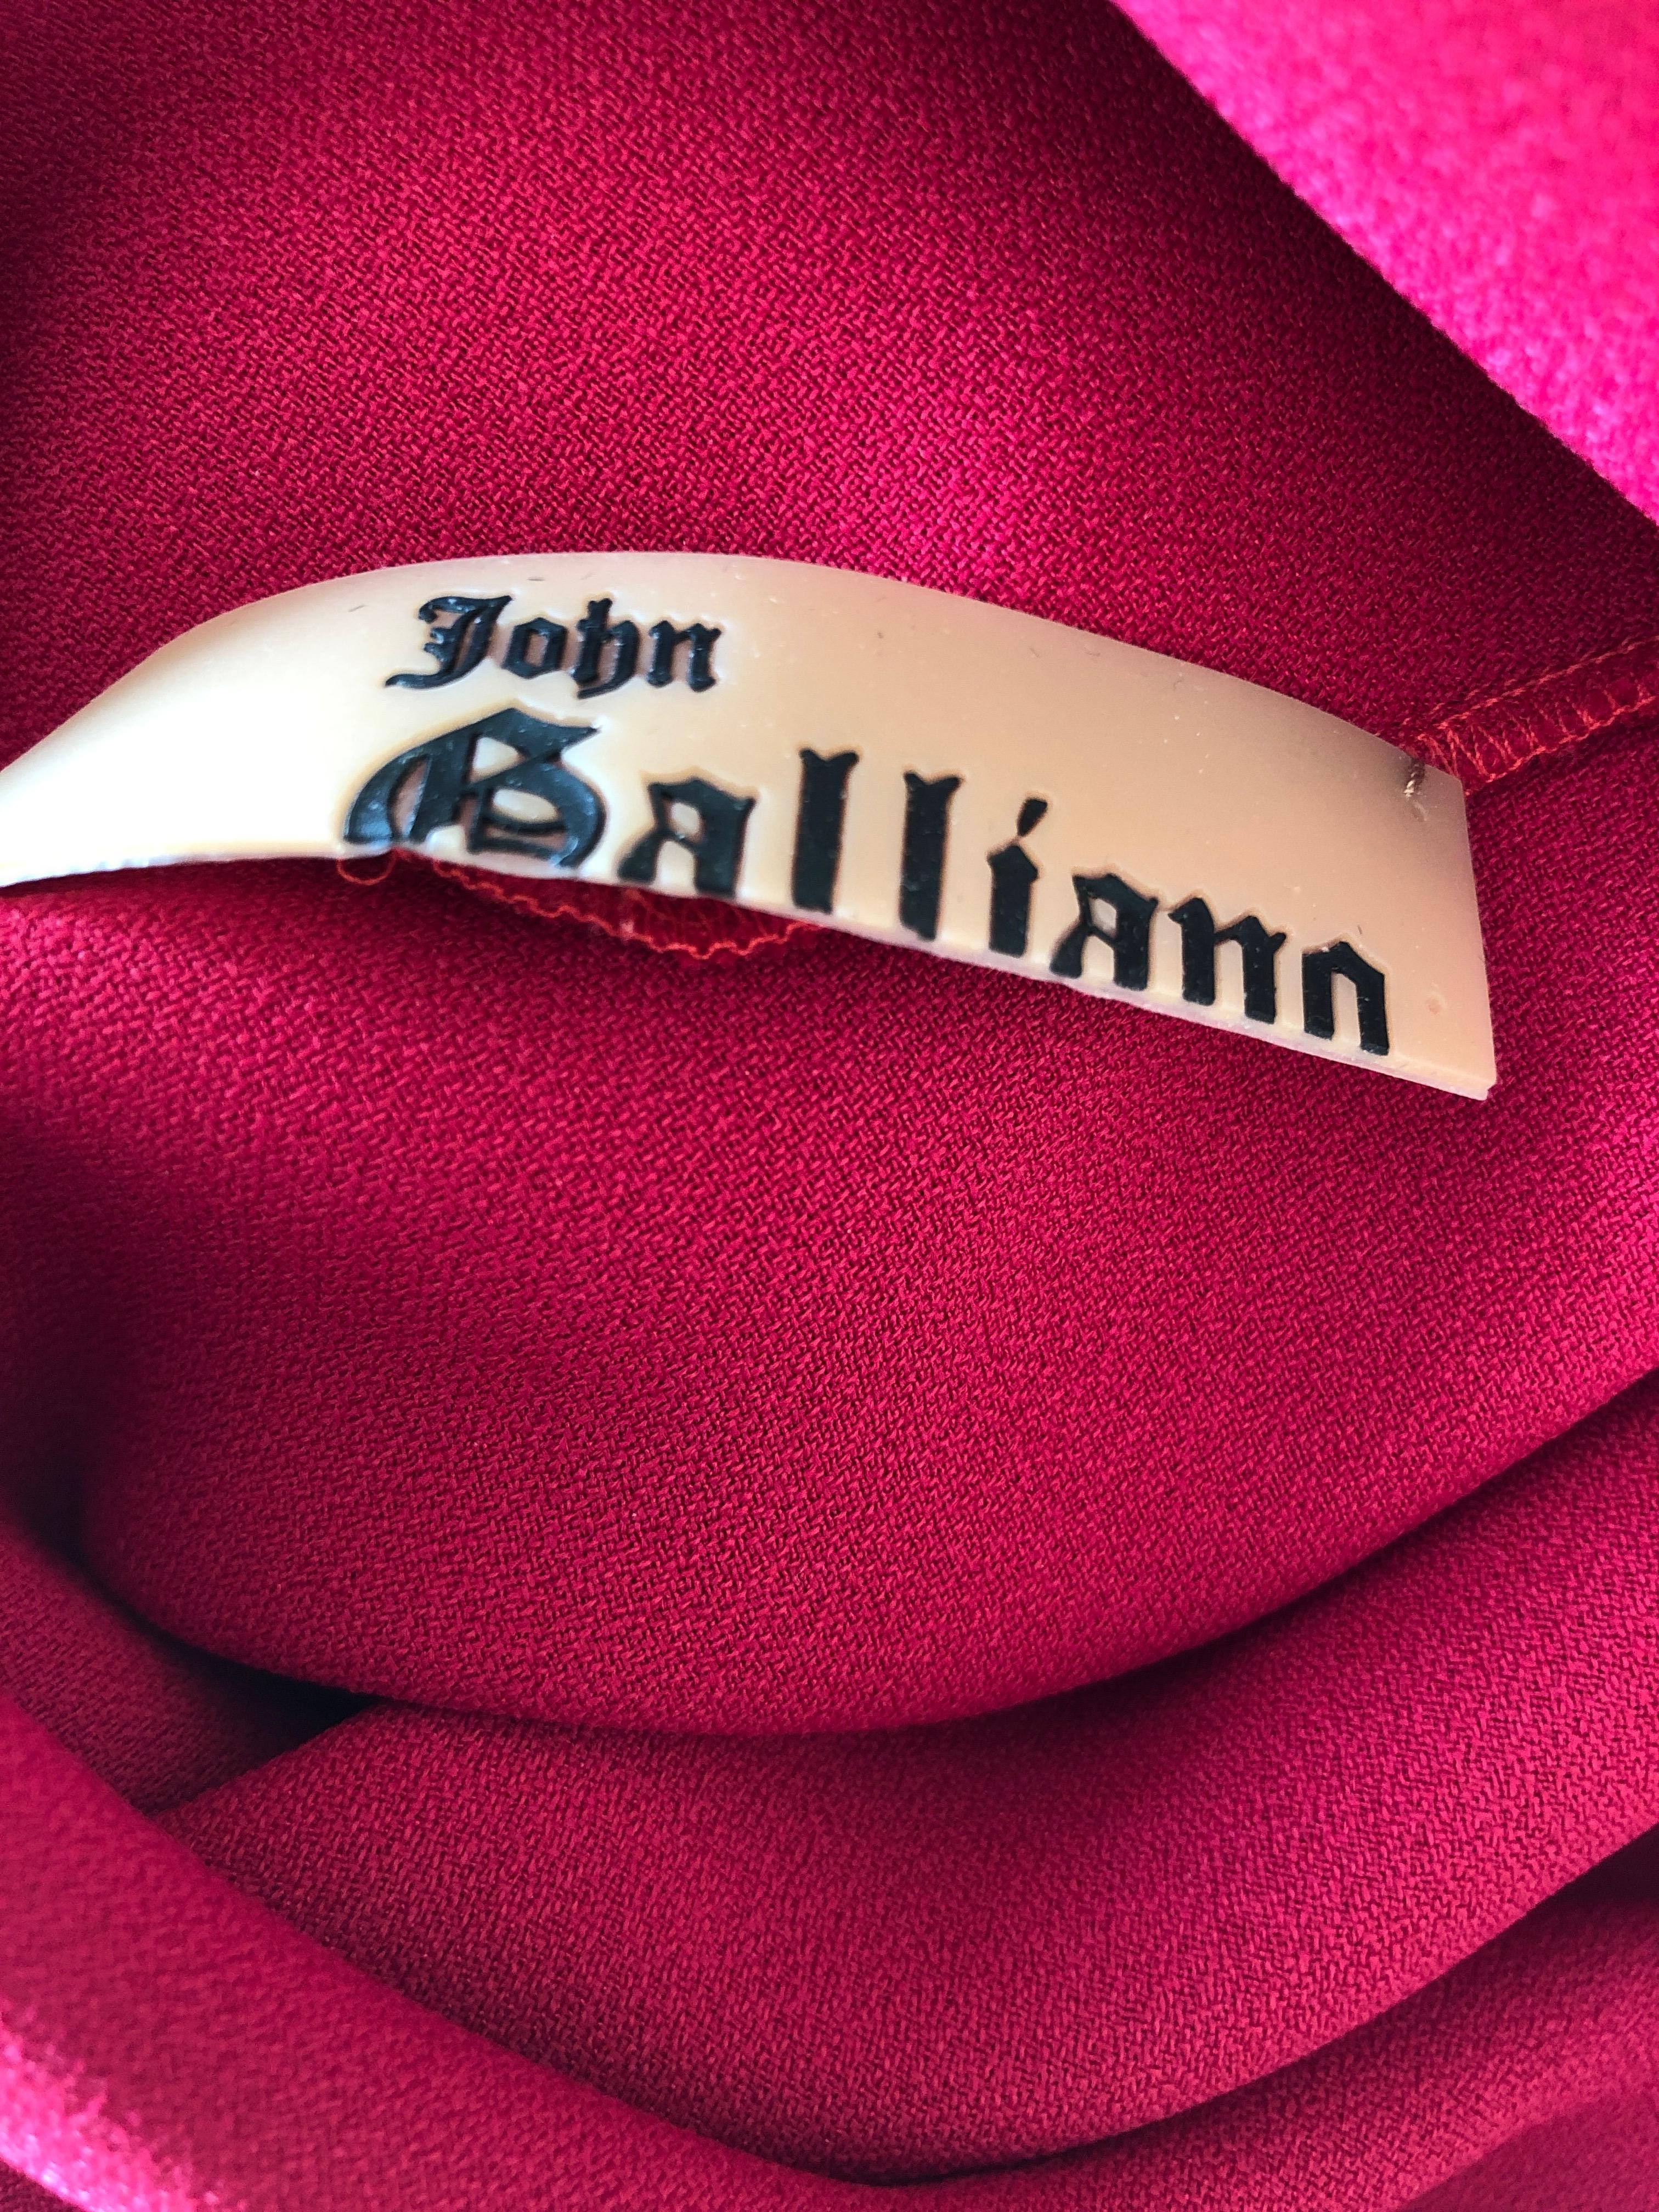 John Galliano Bias Cut Diamond Pattern 1990's Red Cocktail Dress 3